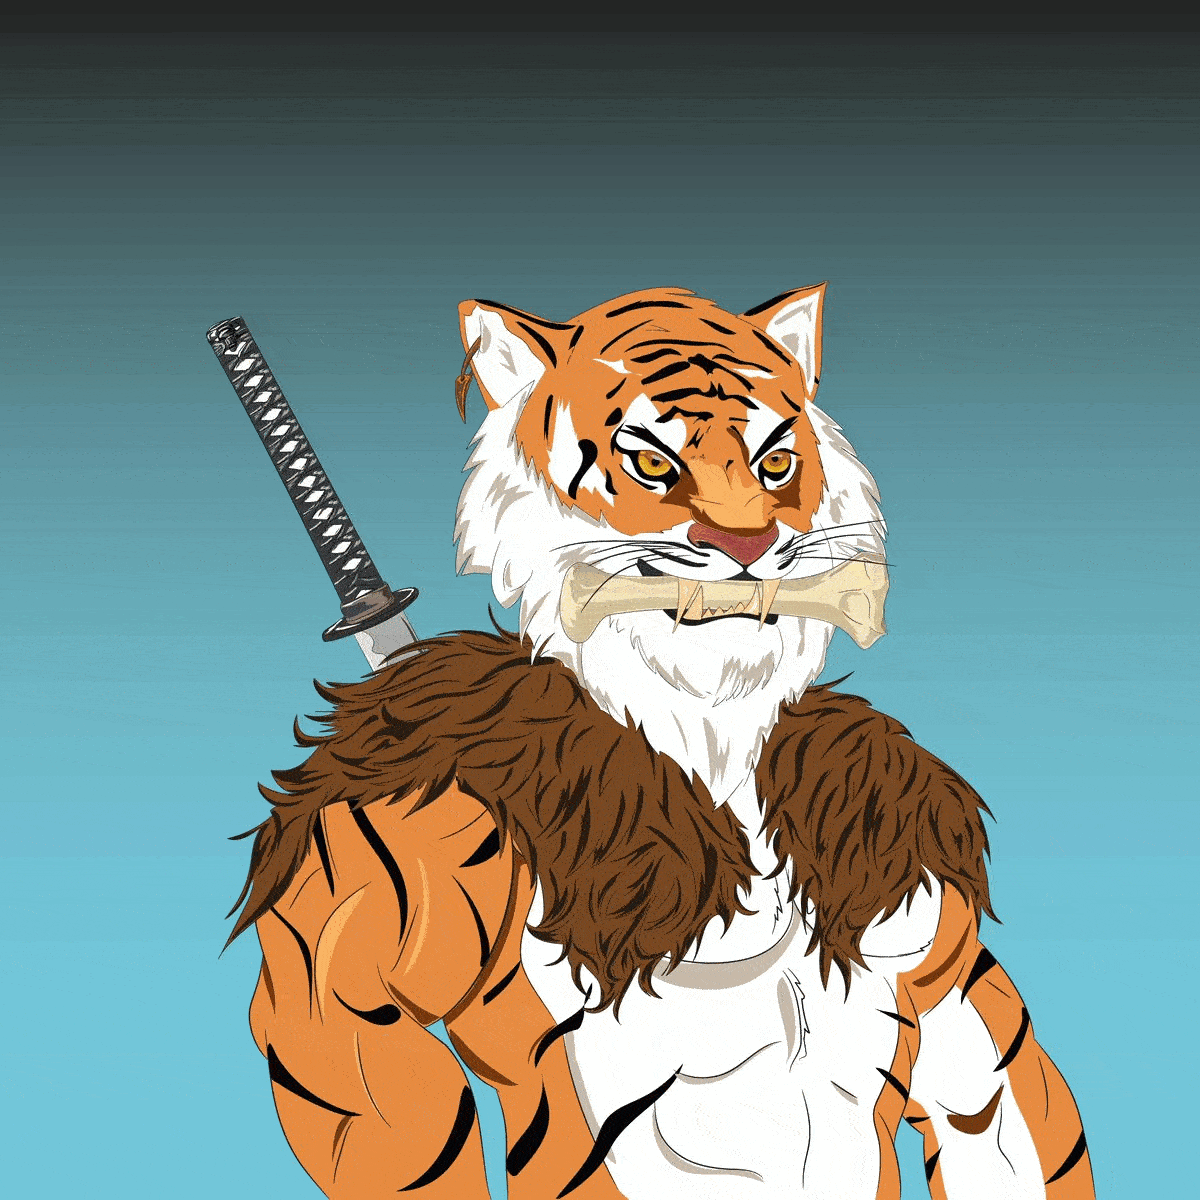 tiger warrior